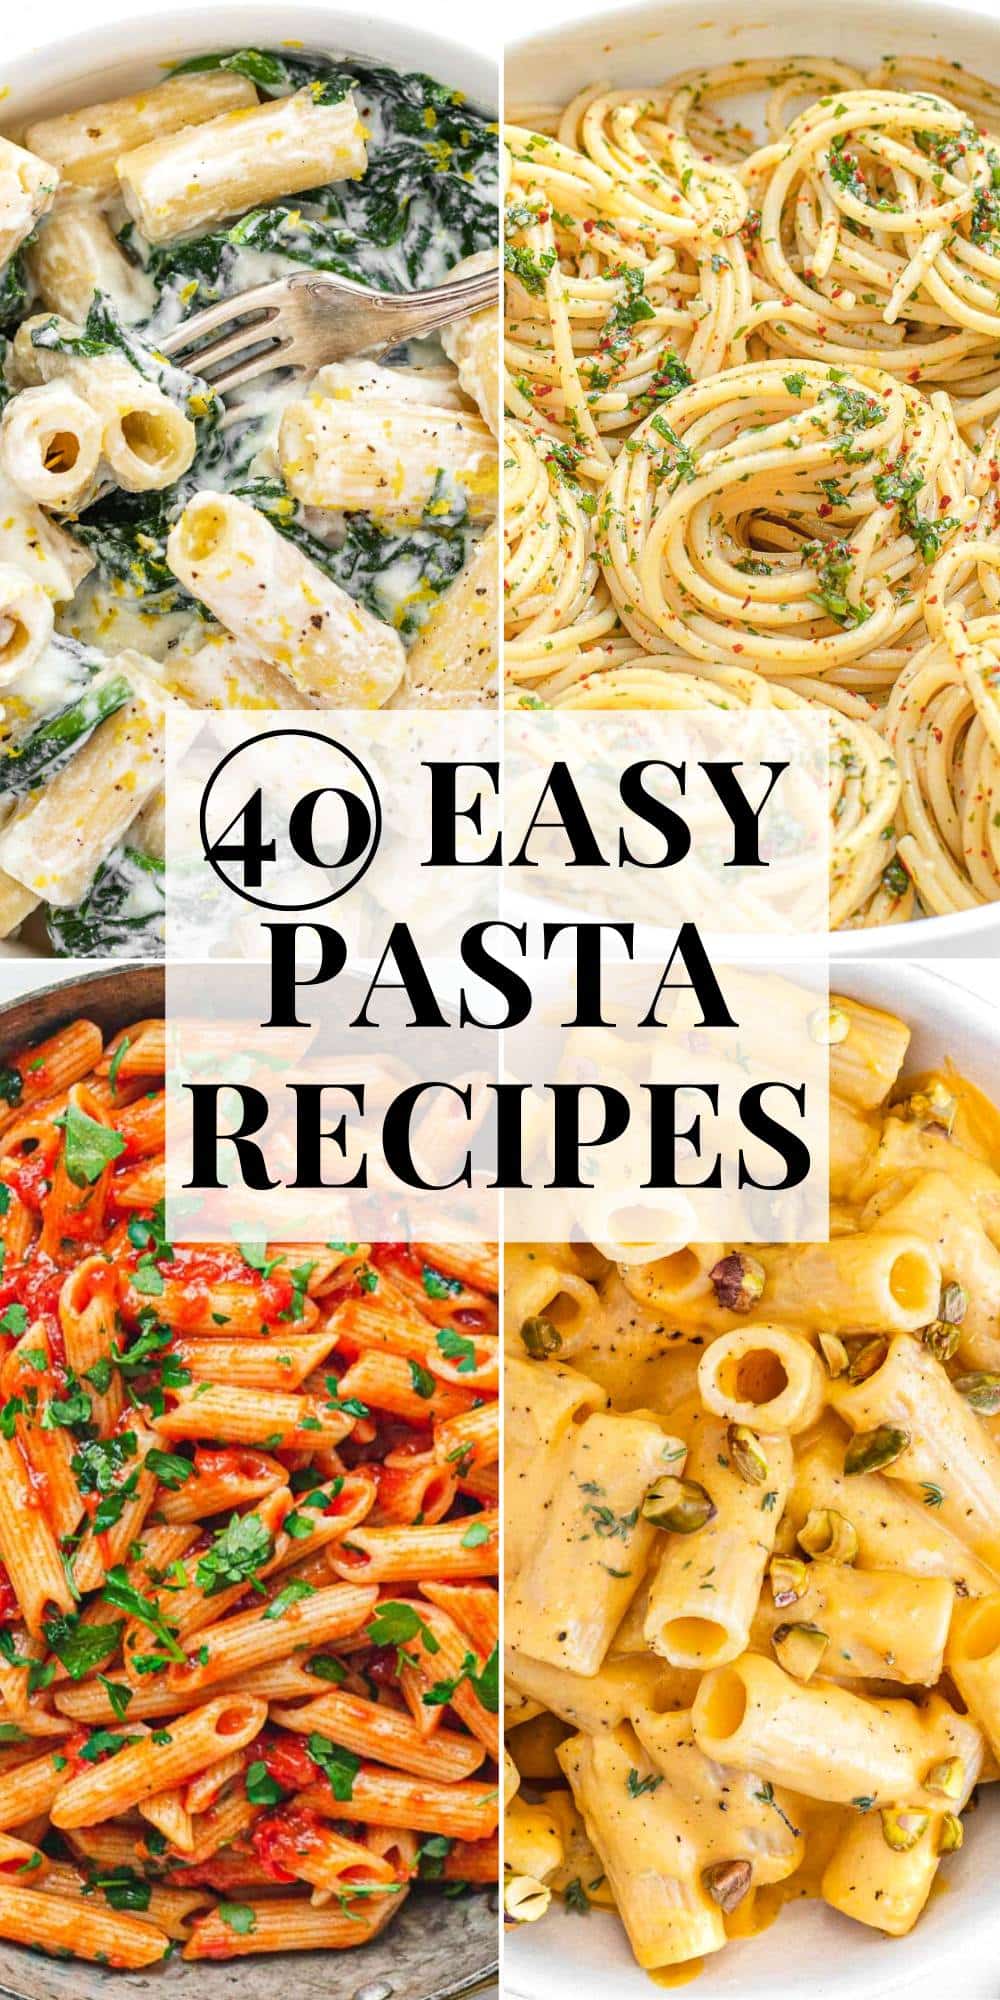 40 Easy Pasta Recipes - The Plant Based School